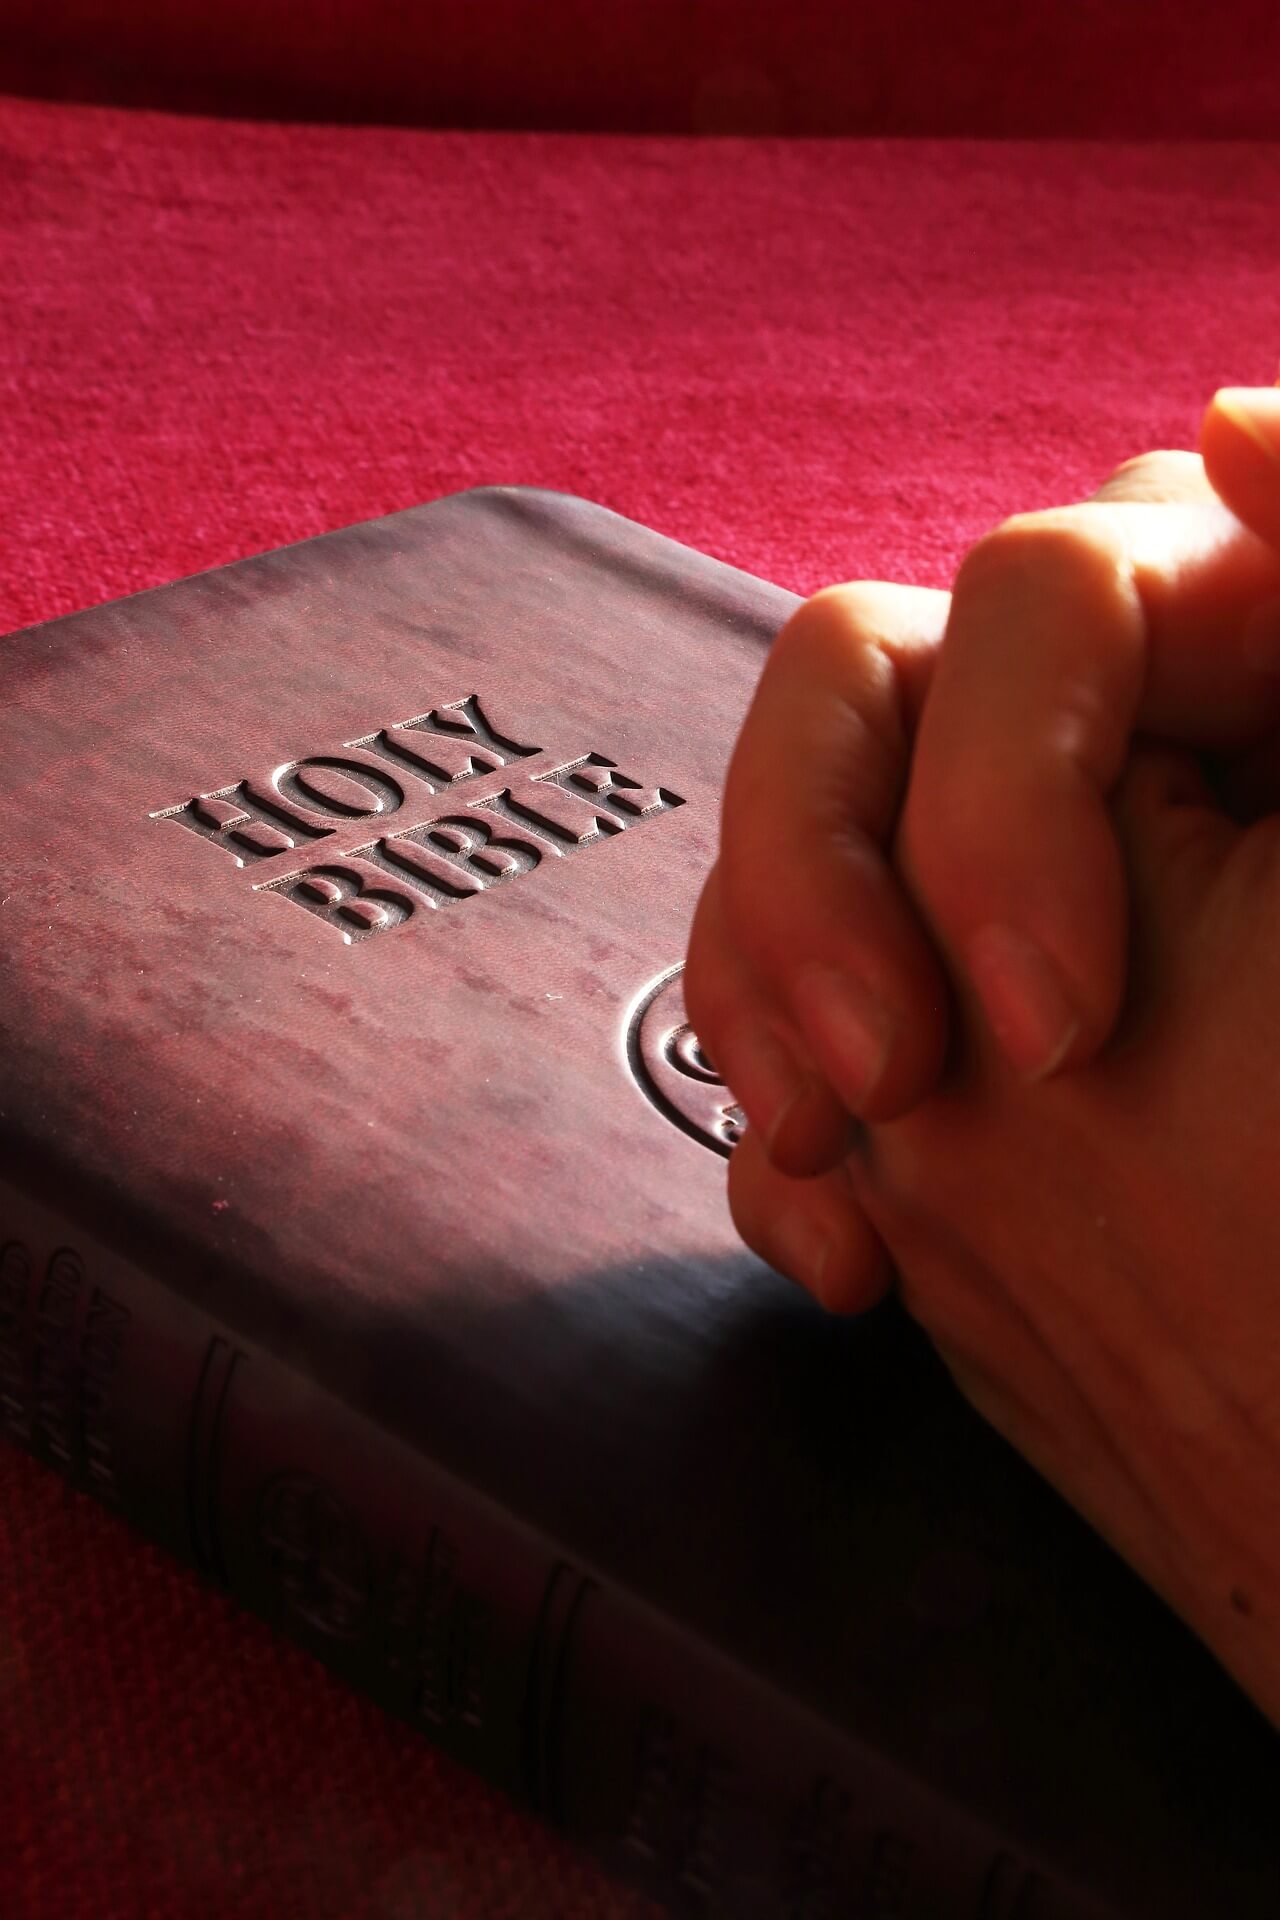 Gambar Alkitab Suci dan tangan berdoa